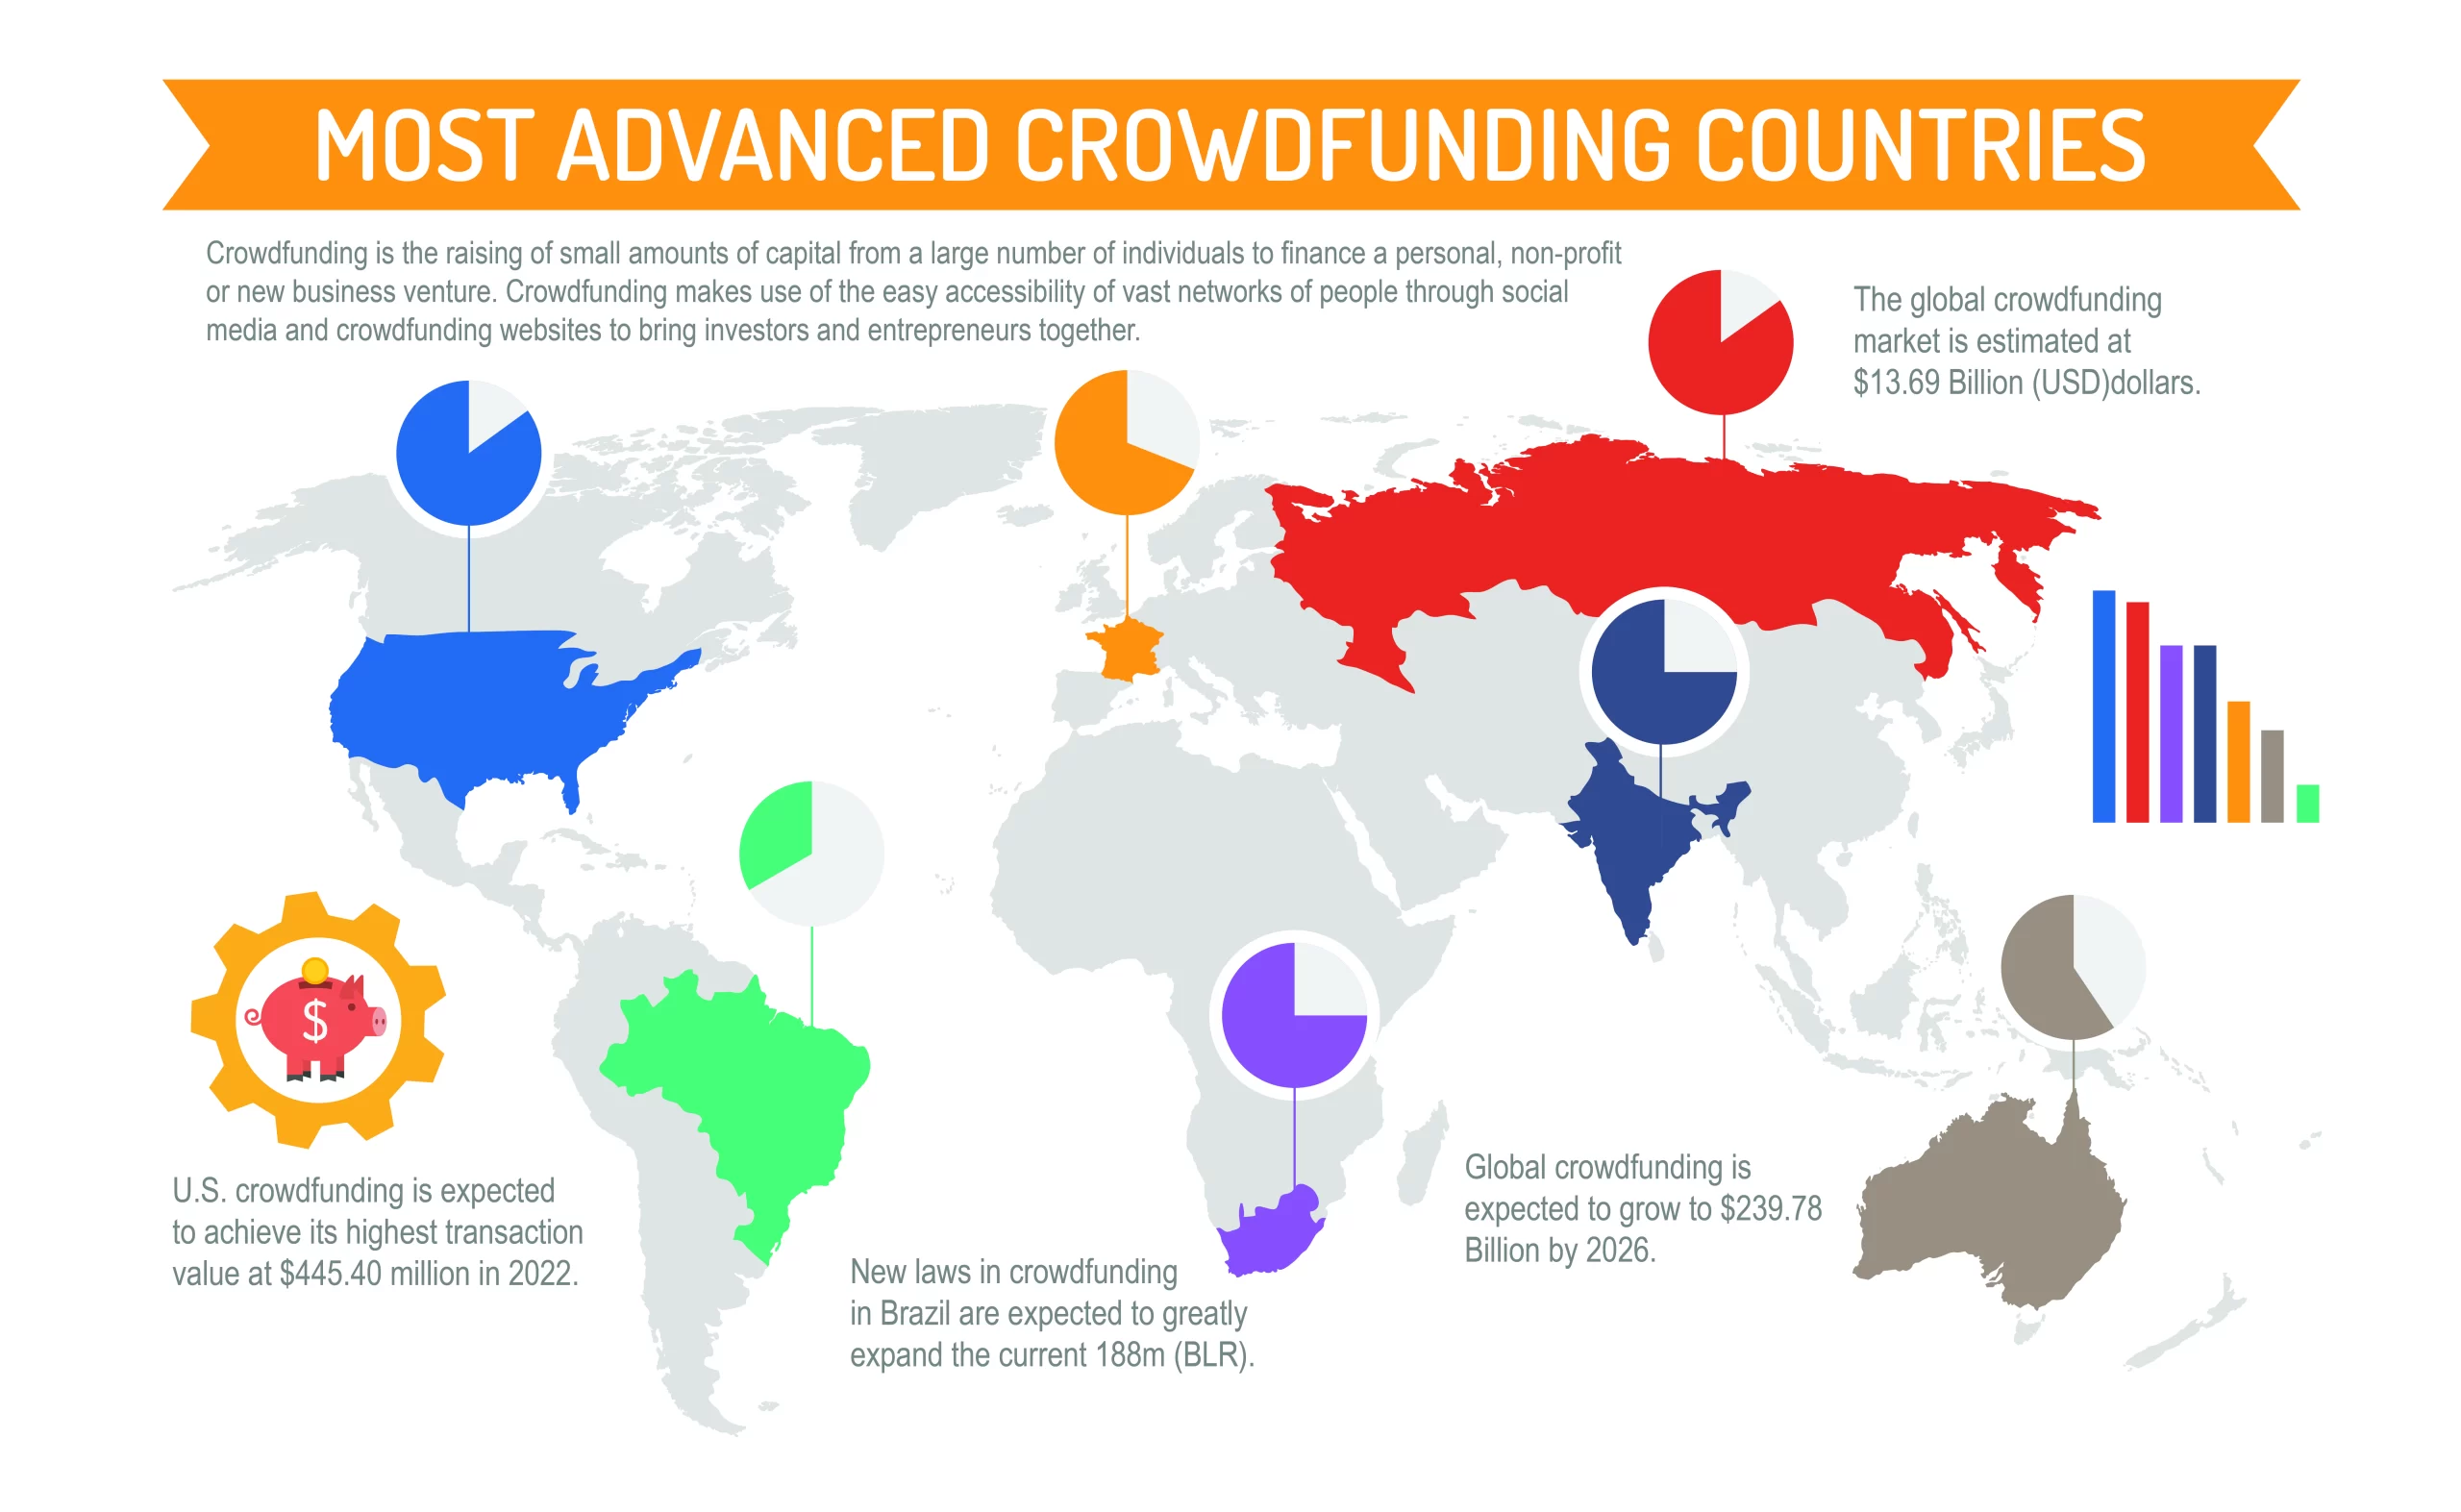 Enterprise crowdfunding